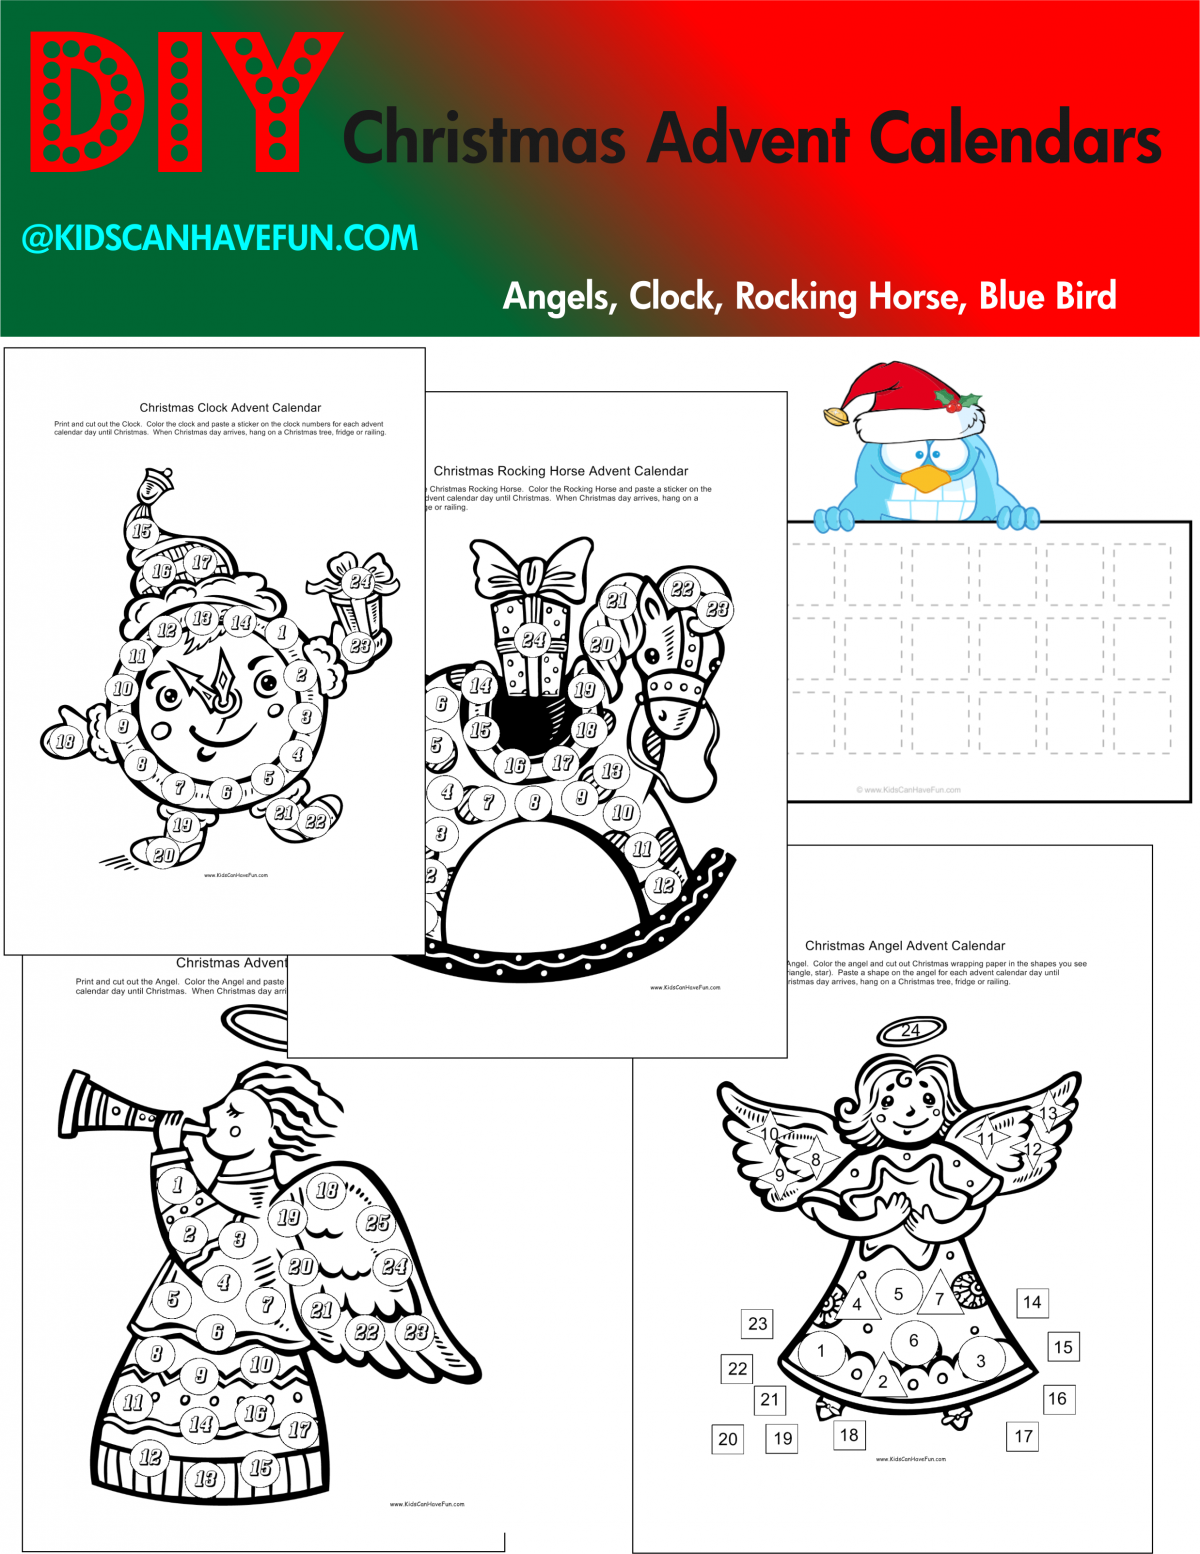 Printable Christmas Advent Calendars Archives • Kidscanhavefun Blog